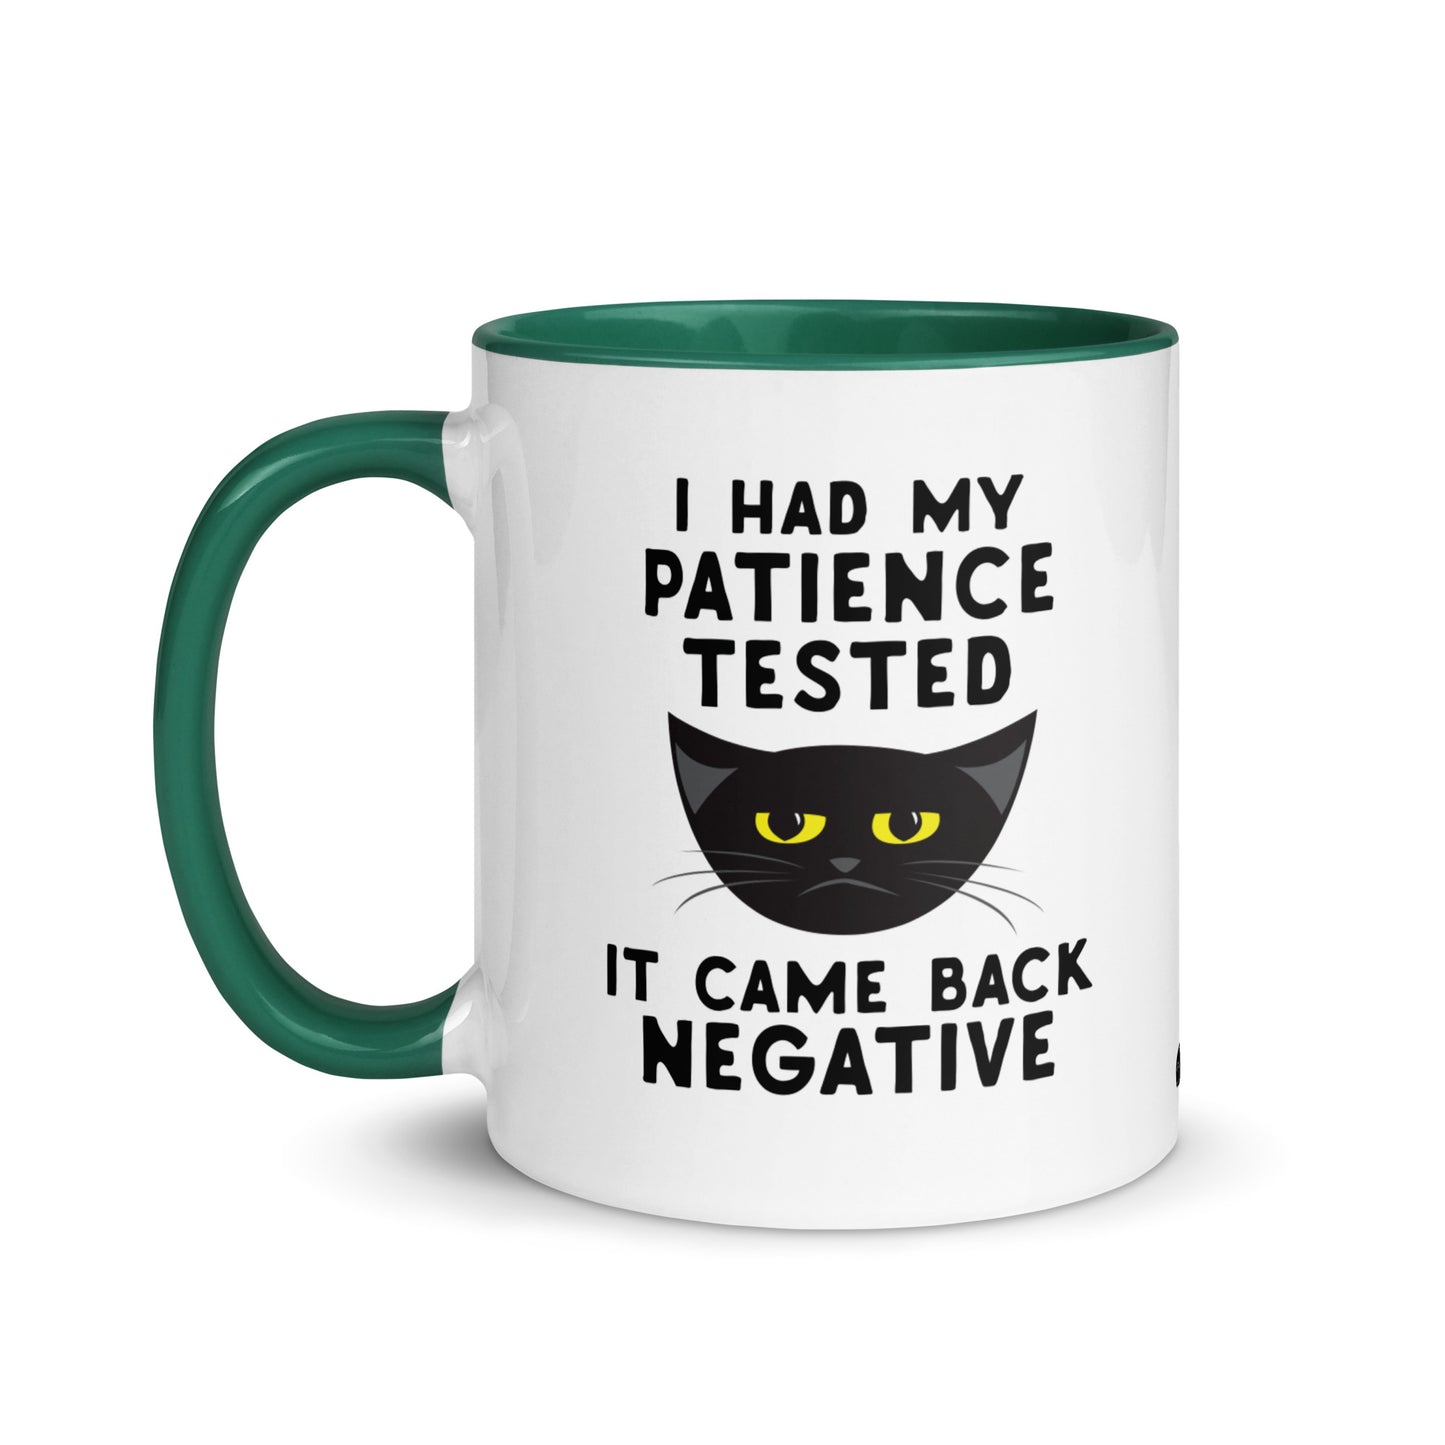 That's a Negative - Ceramic Mug